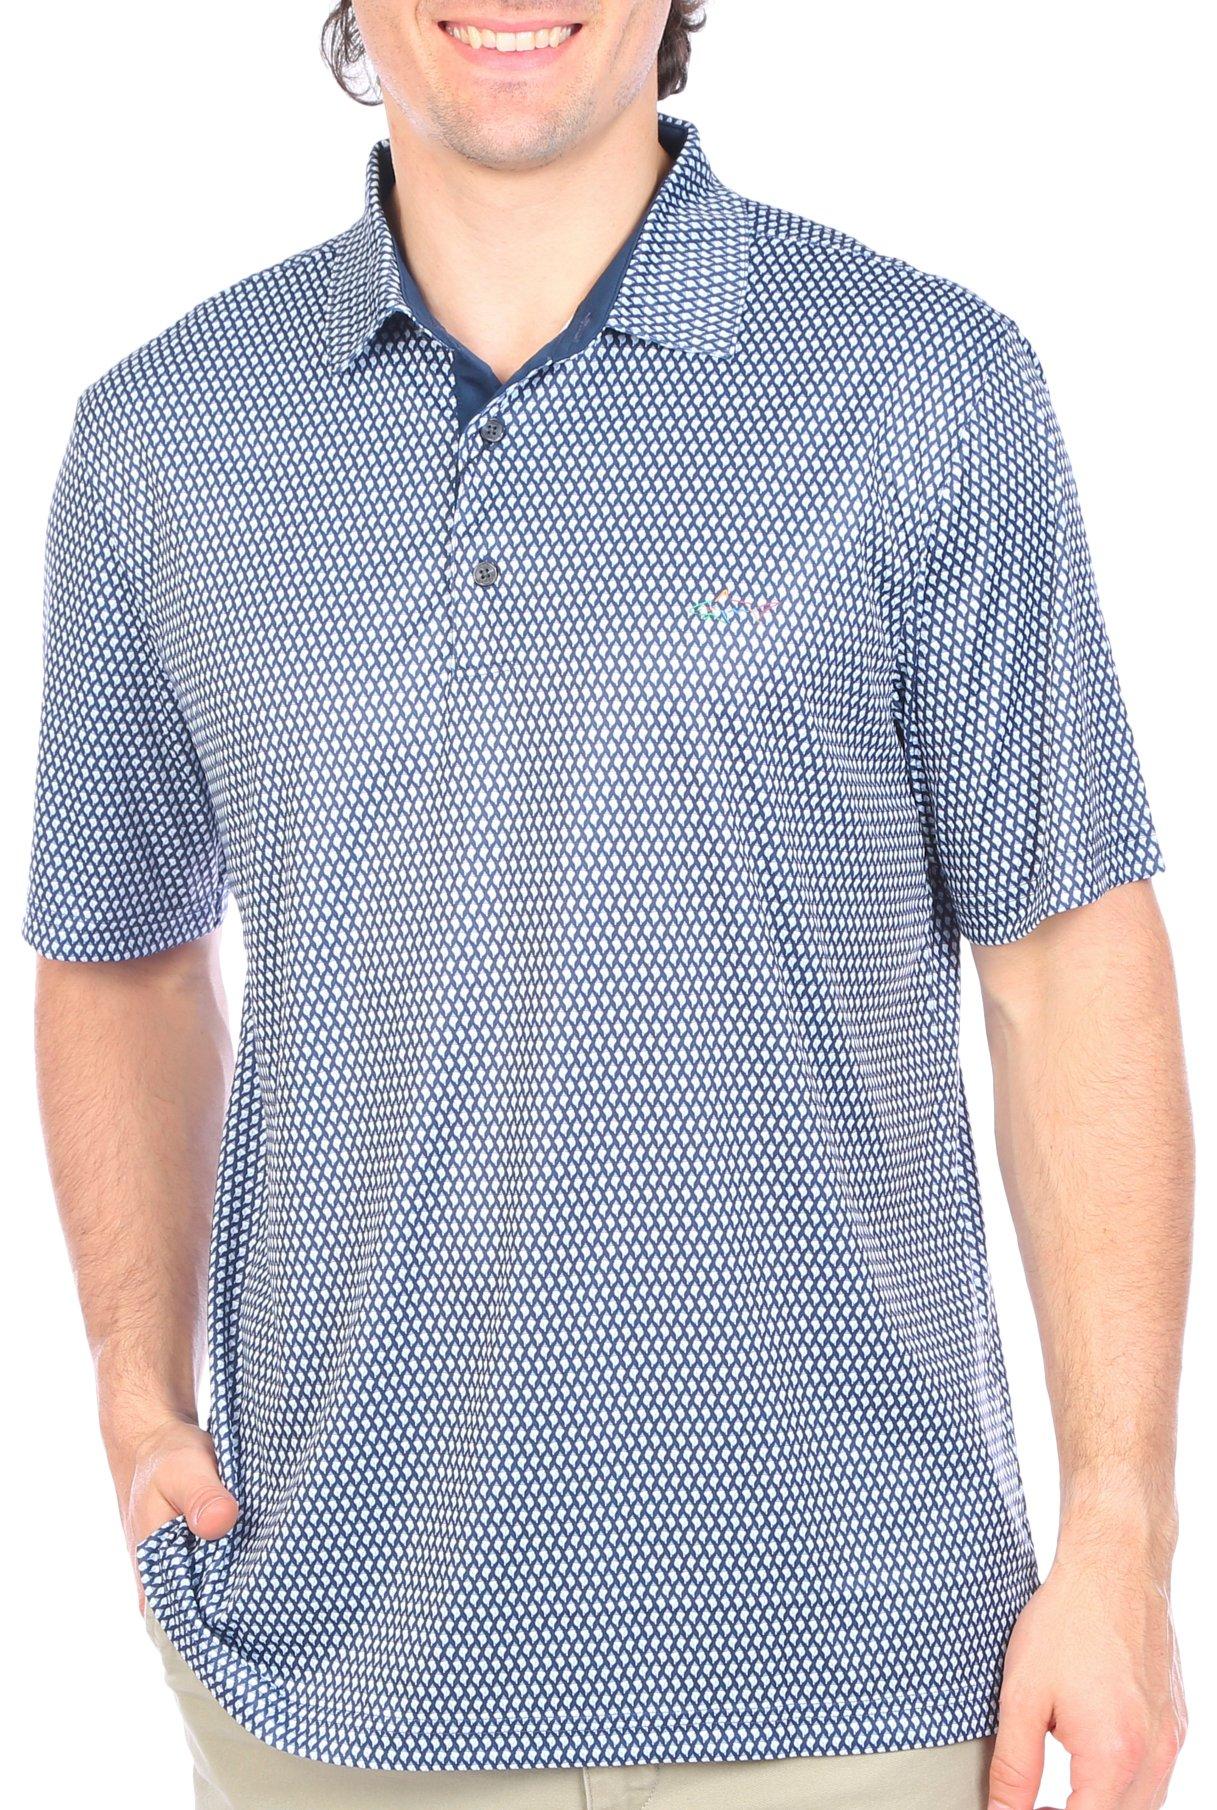 Greg Norman Mens Abstract Shark Short Sleeve Polo Shirt